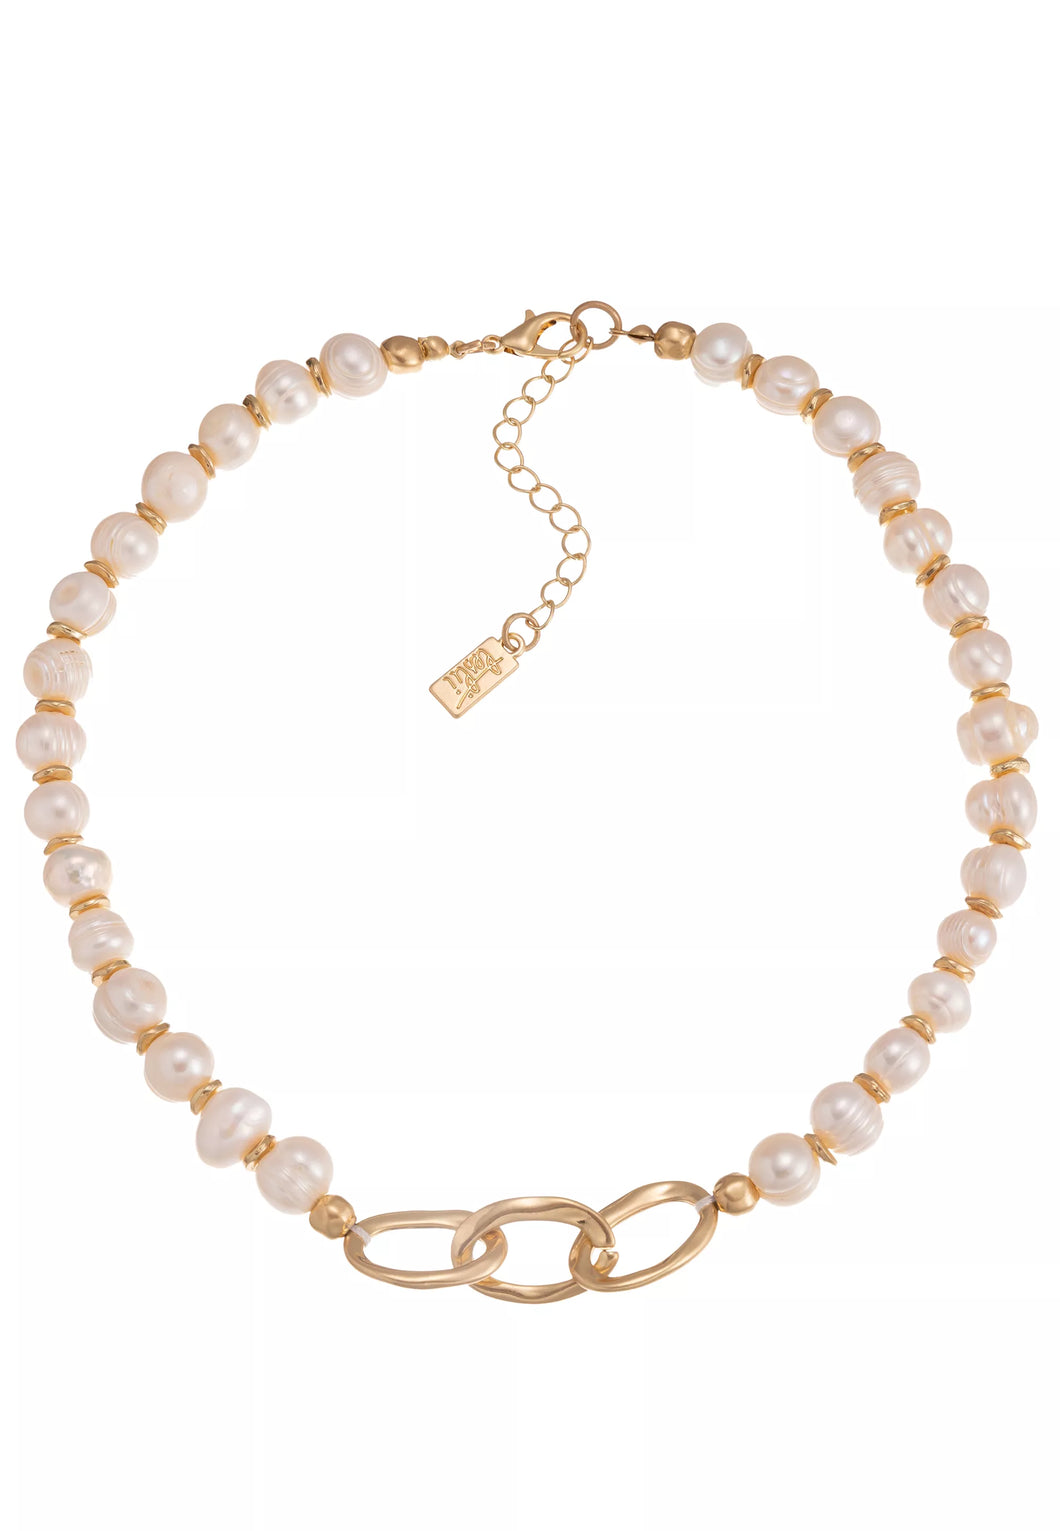 Leslii Kurze Perlen-Kette mit goldenen Gliedern kurze Modeschmuck-Kette Gold Weiß